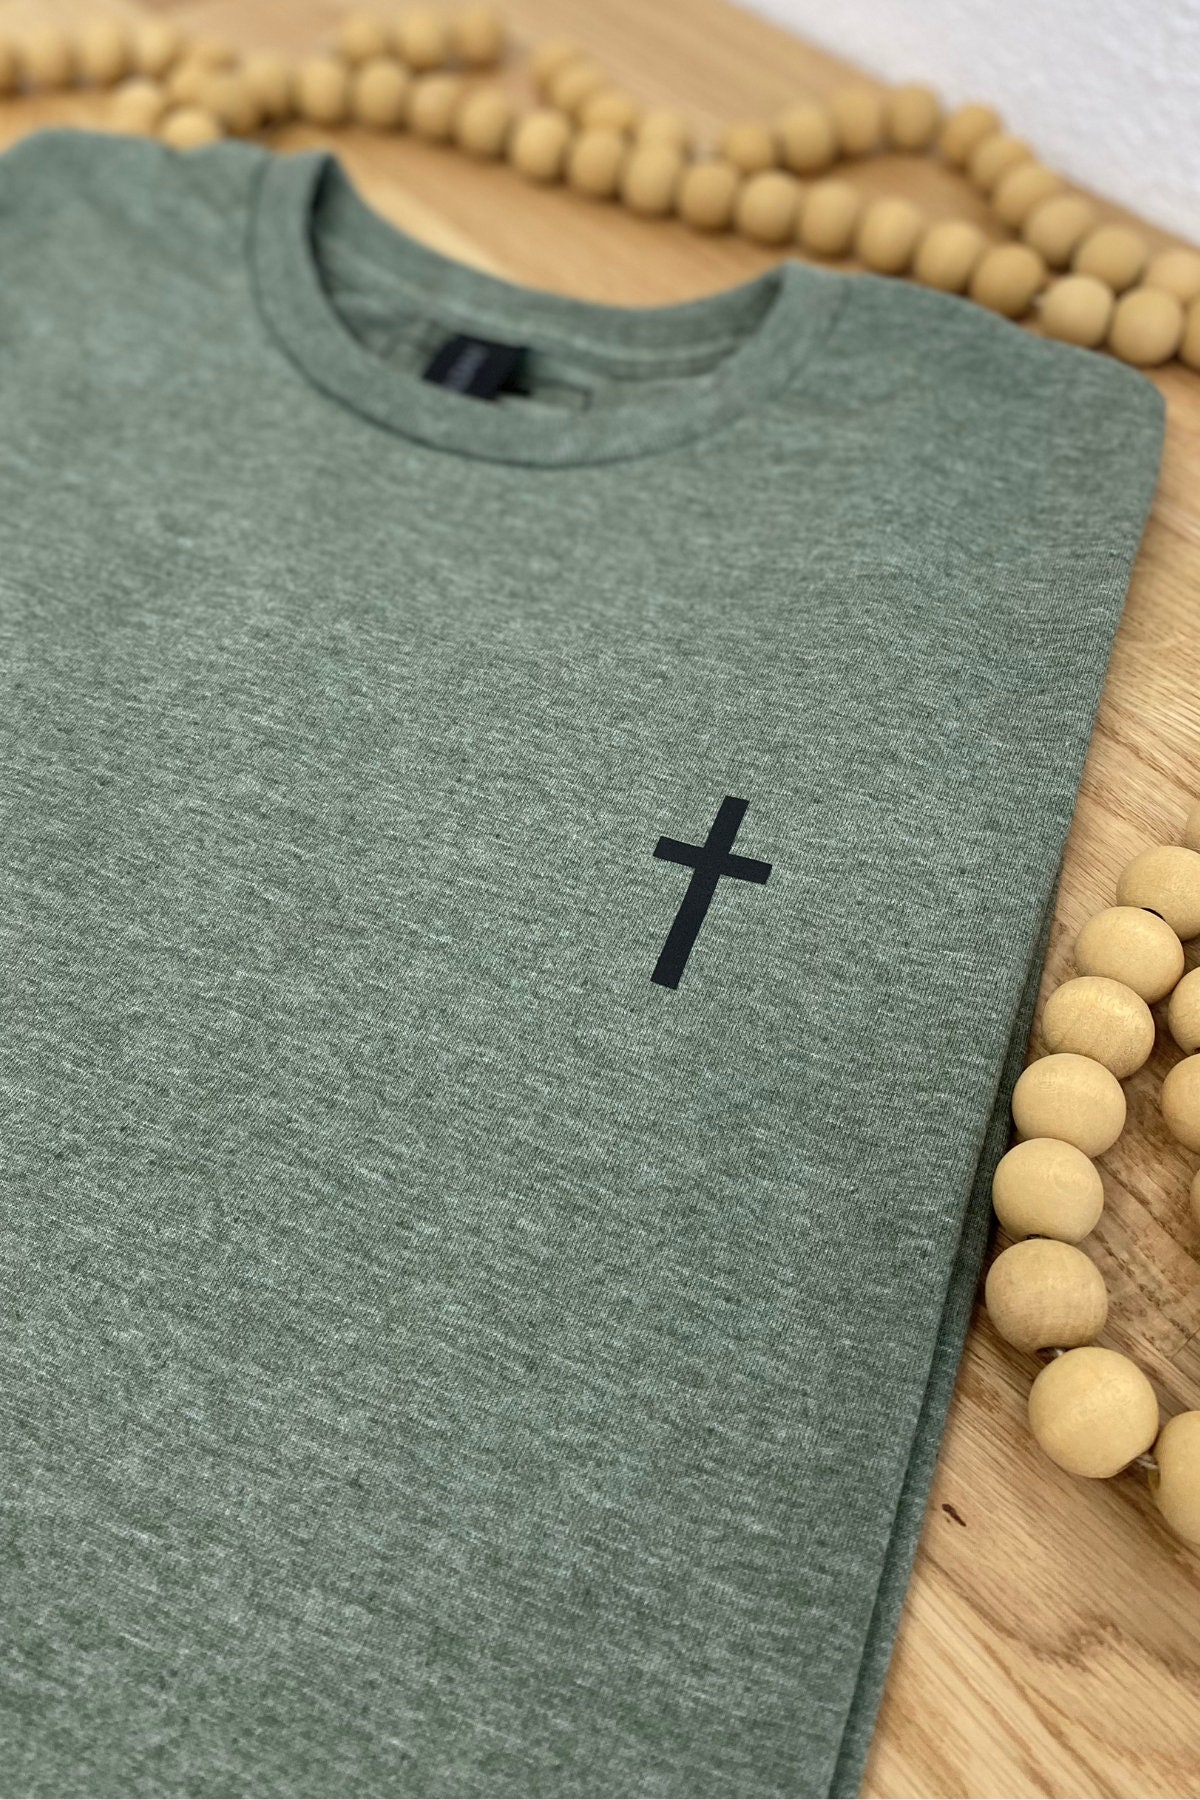 Mens Christian Shirt With Cross Mens Shirt for Christian - Etsy